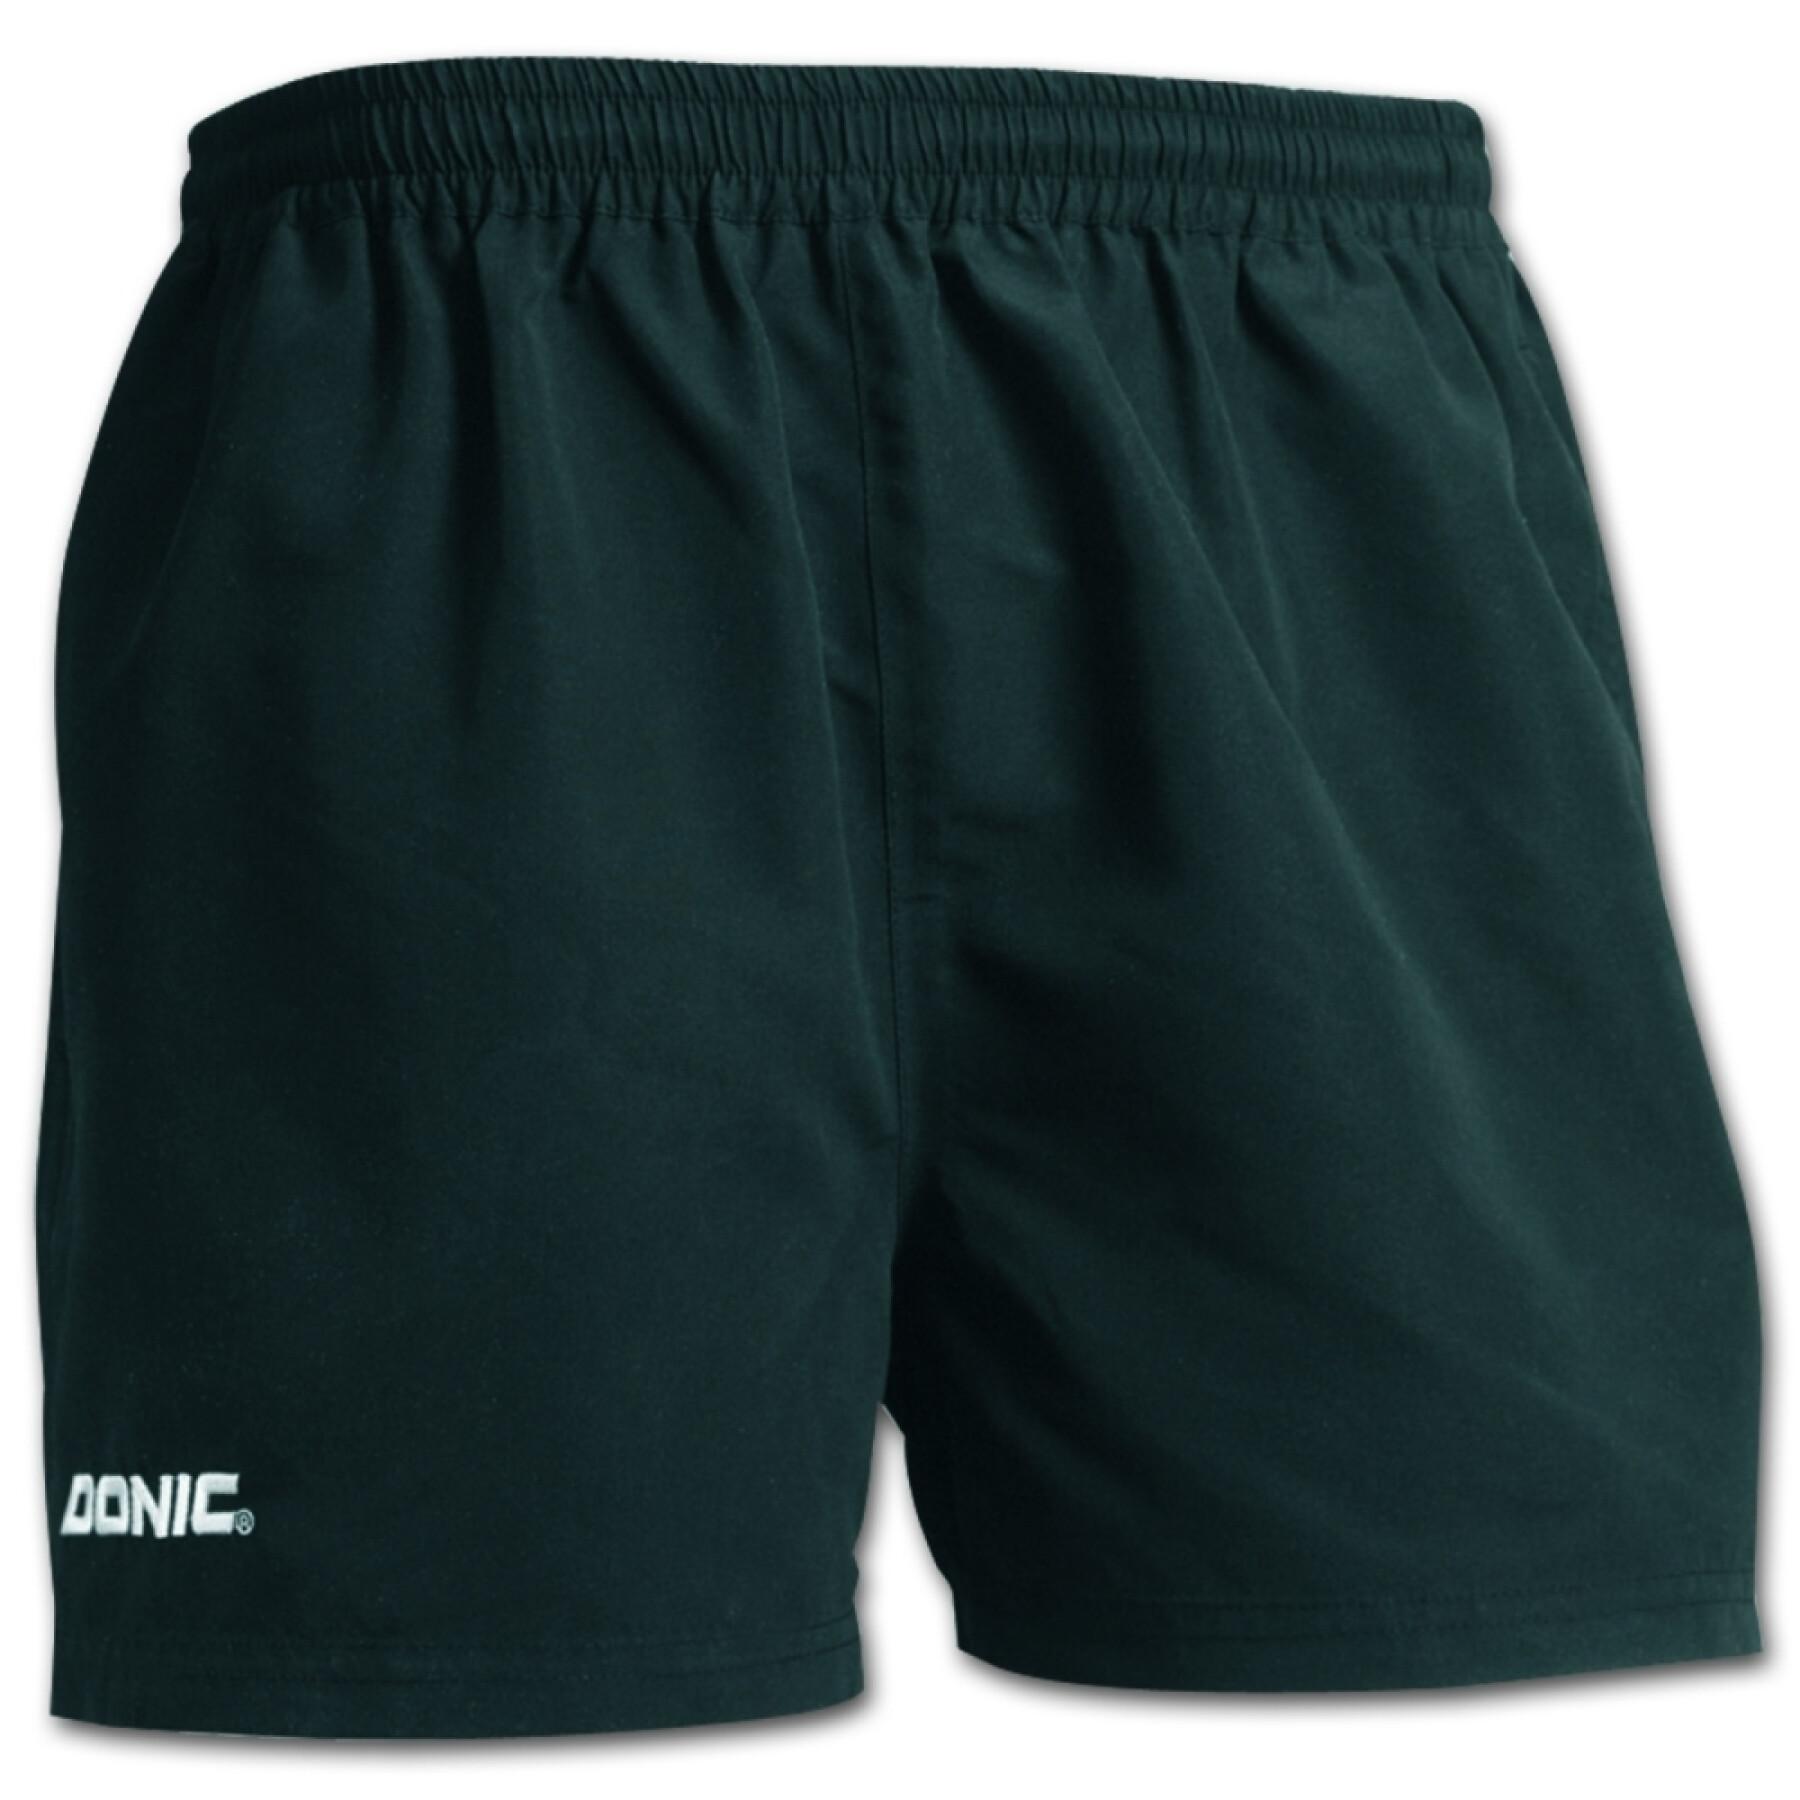 Children's shorts Donic Basic